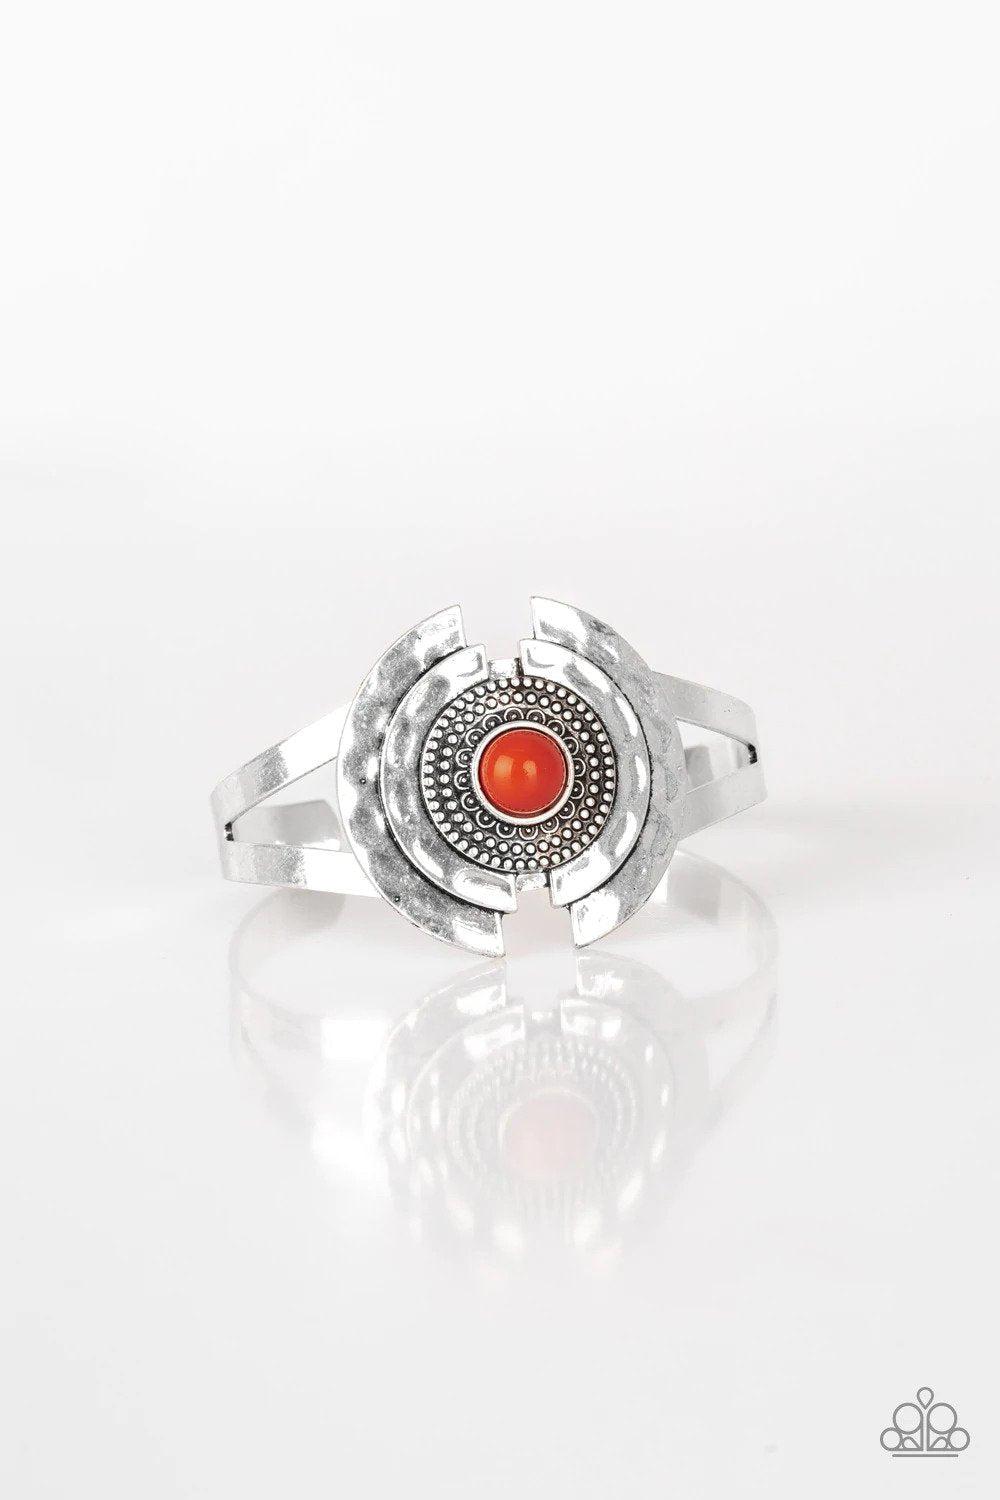 Incredibly Indie Orange Bracelet - Paparazzi Accessories- lightbox - CarasShop.com - $5 Jewelry by Cara Jewels